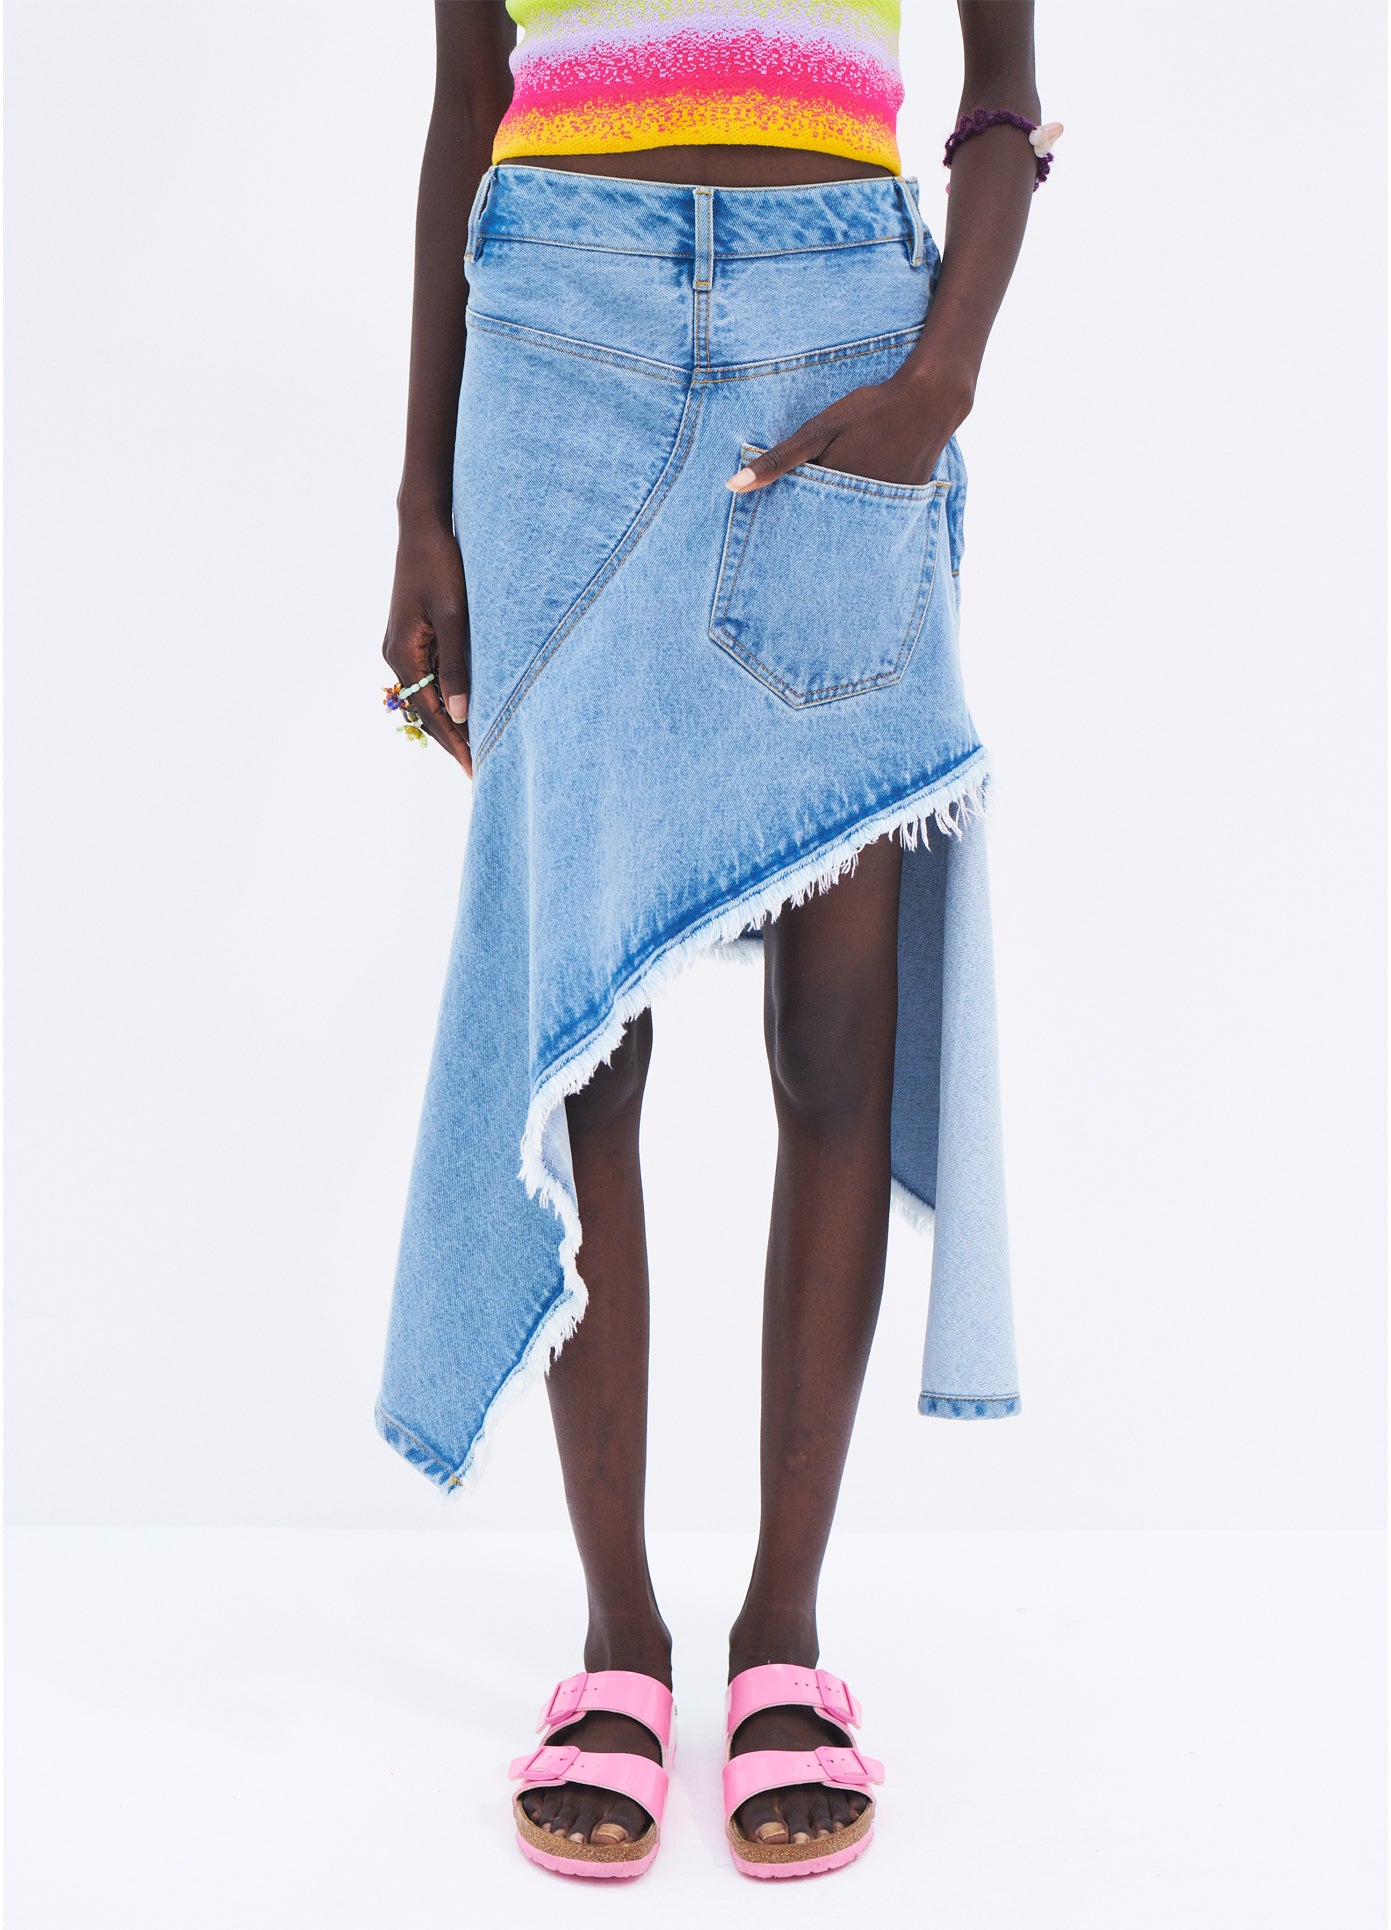 MONSE Twisted Denim Skirt in Indigo on model front view